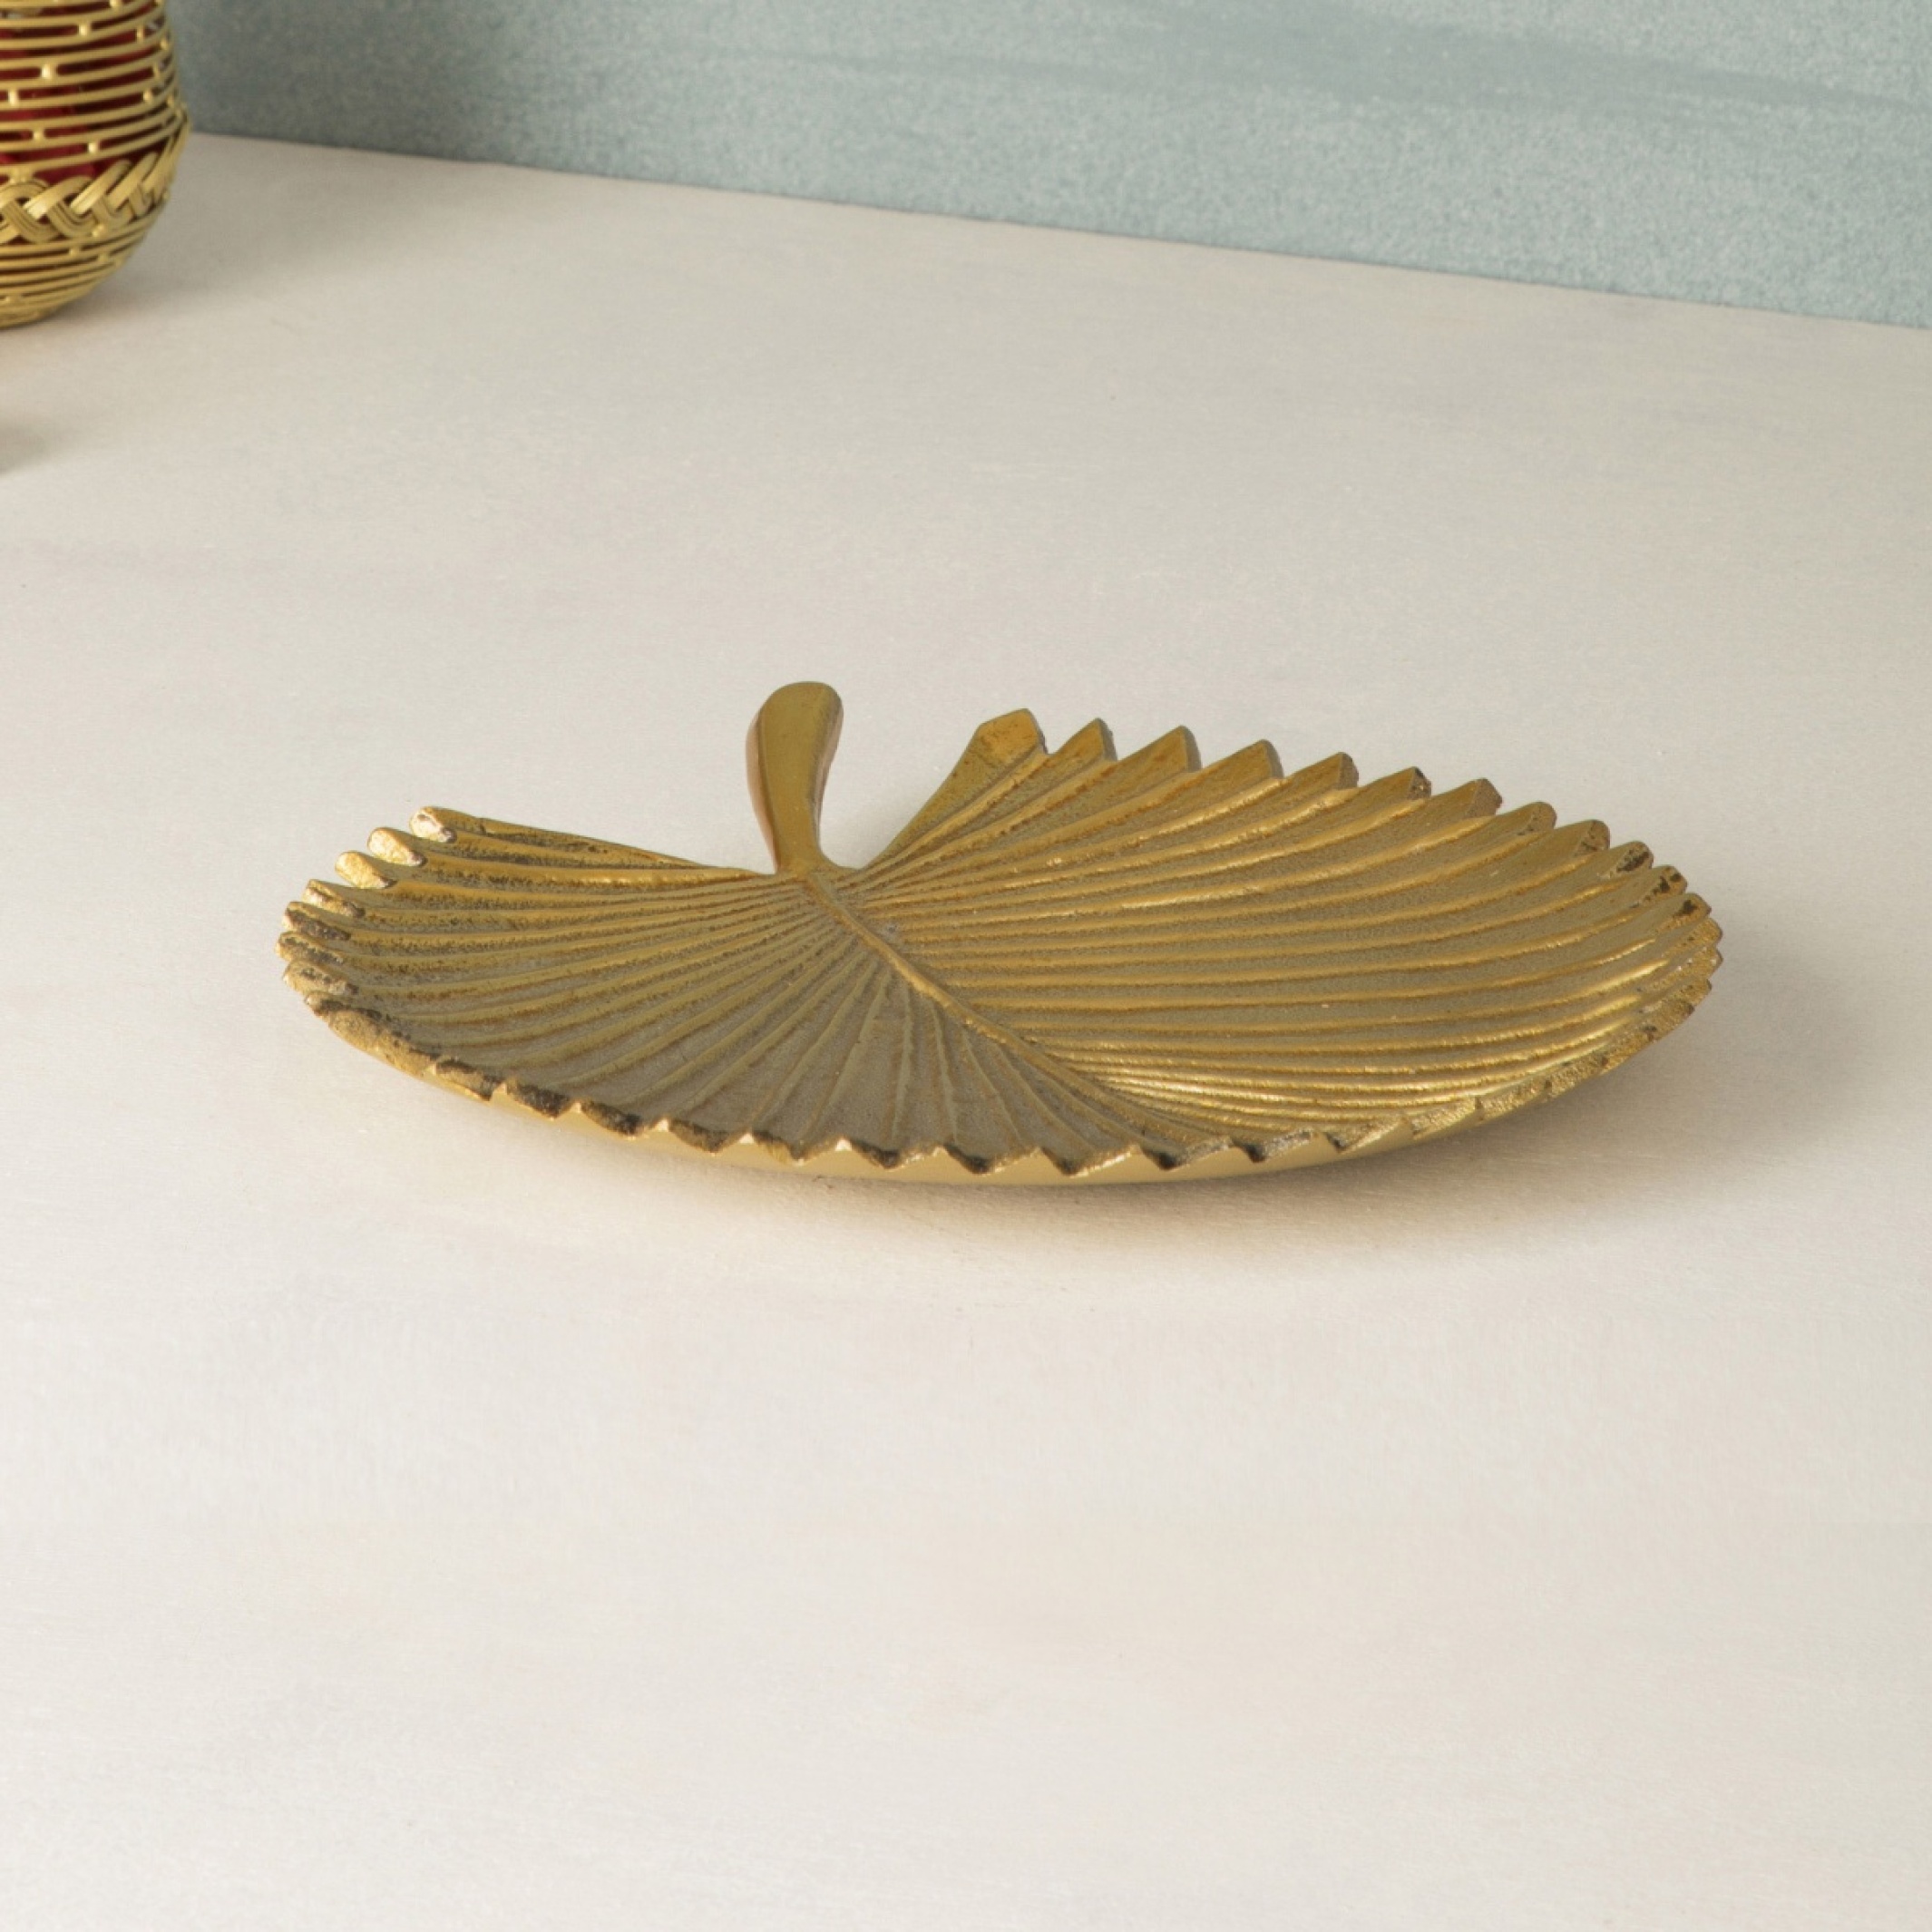 Leon Metal Leaf Decorative Platter